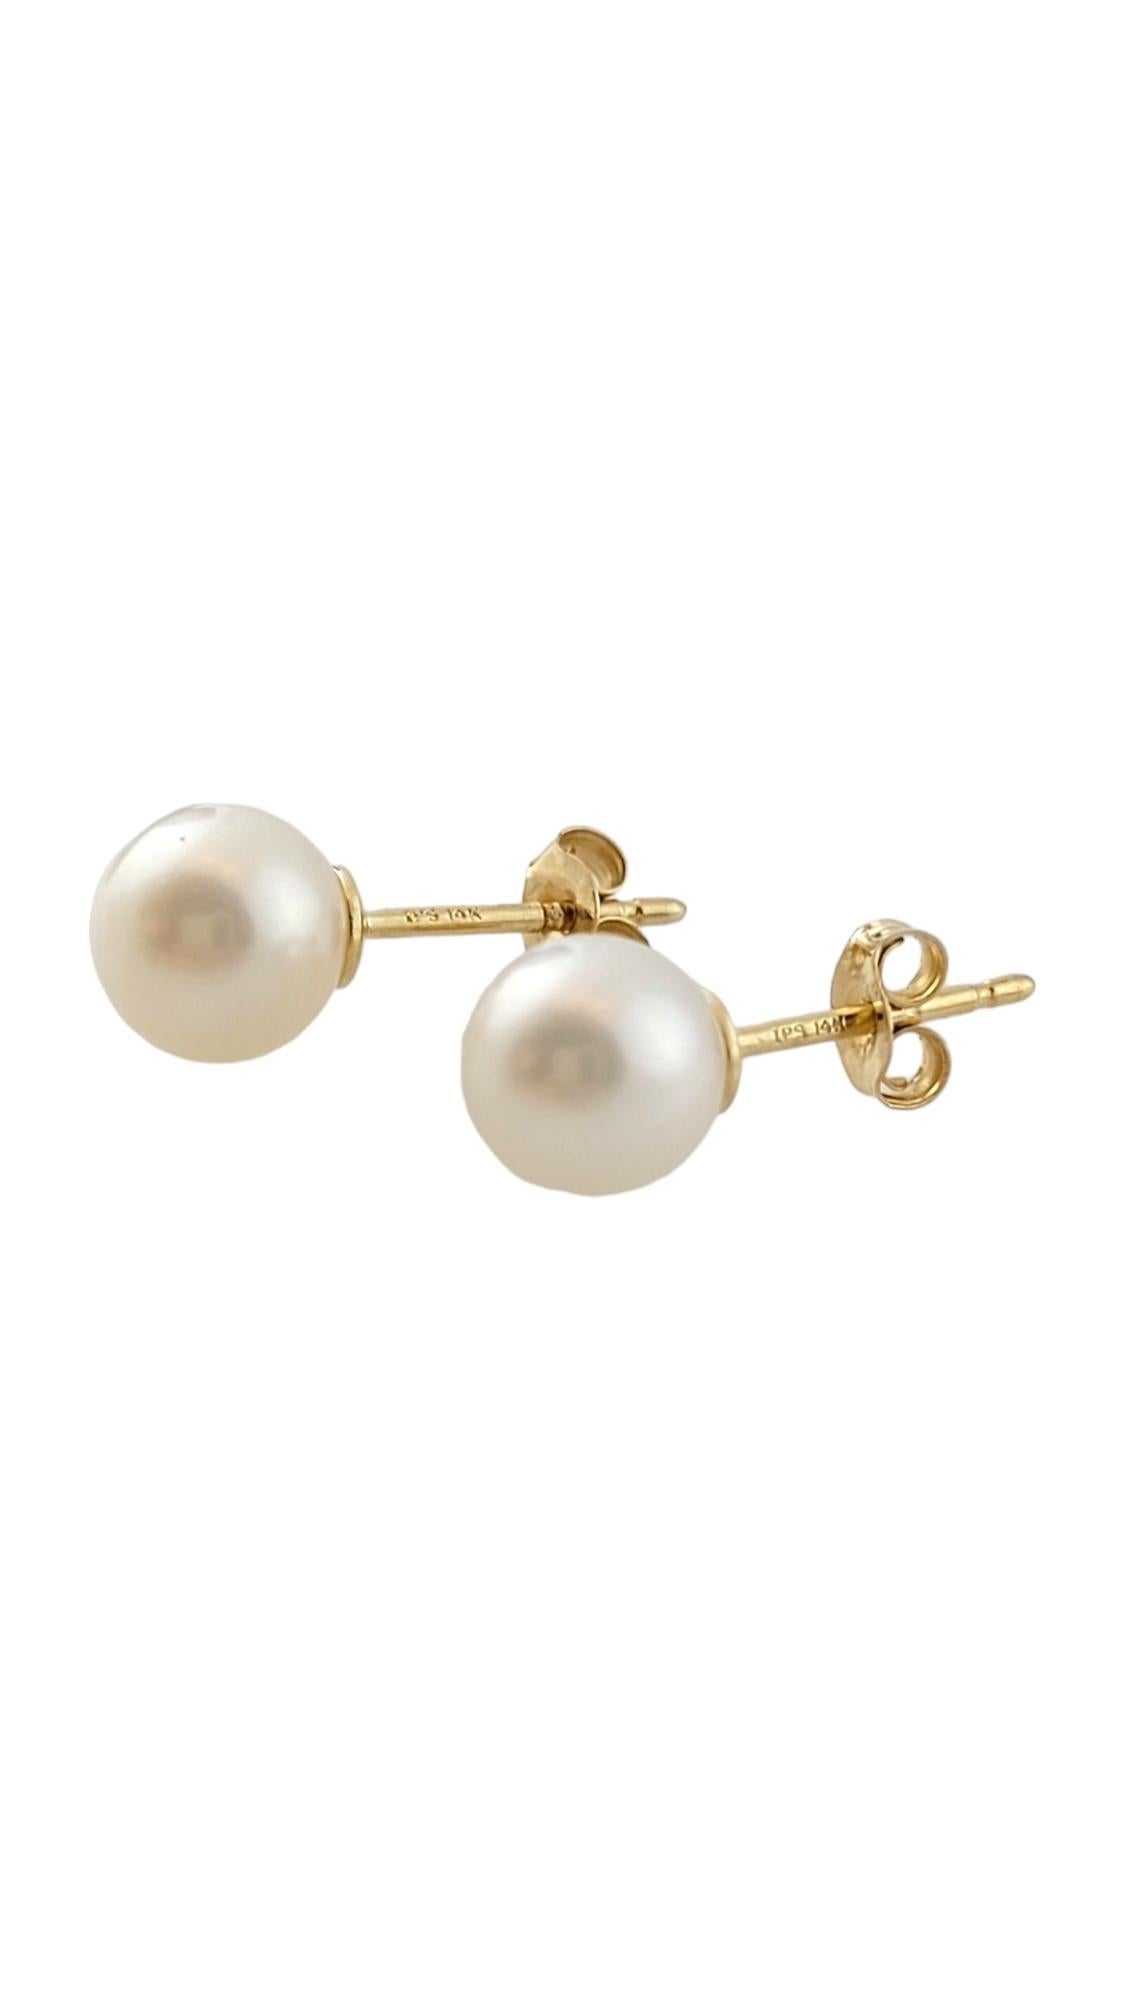 Brilliant Cut 14K Yellow Gold Pearl & Diamond Earrings #16464 For Sale